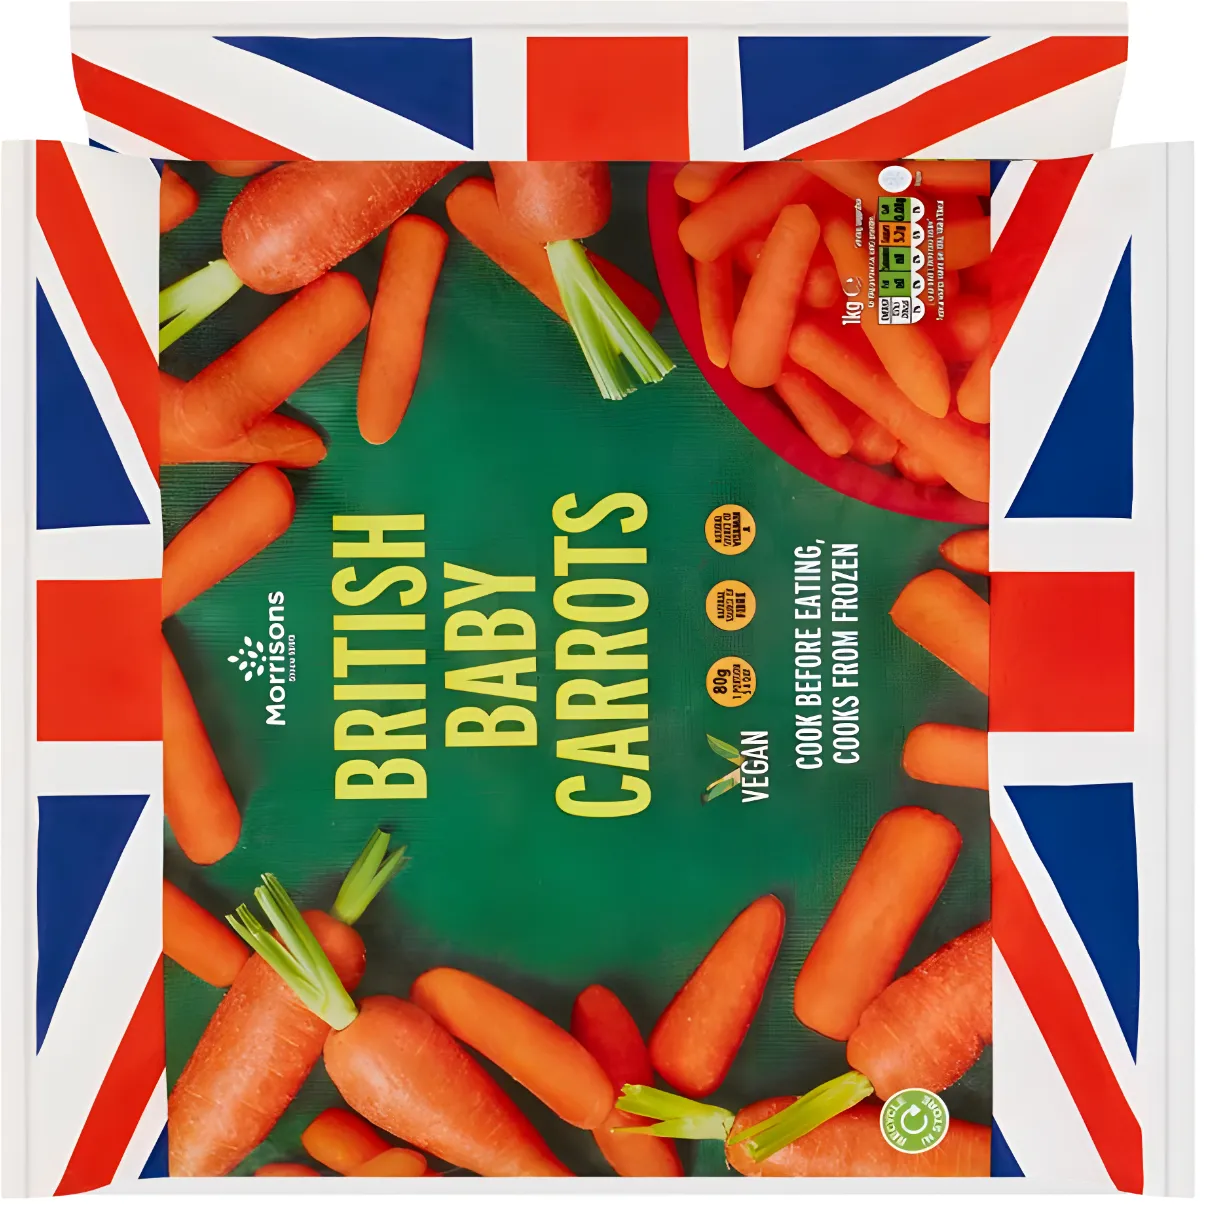 Free Tesco And Morrisons Carrots